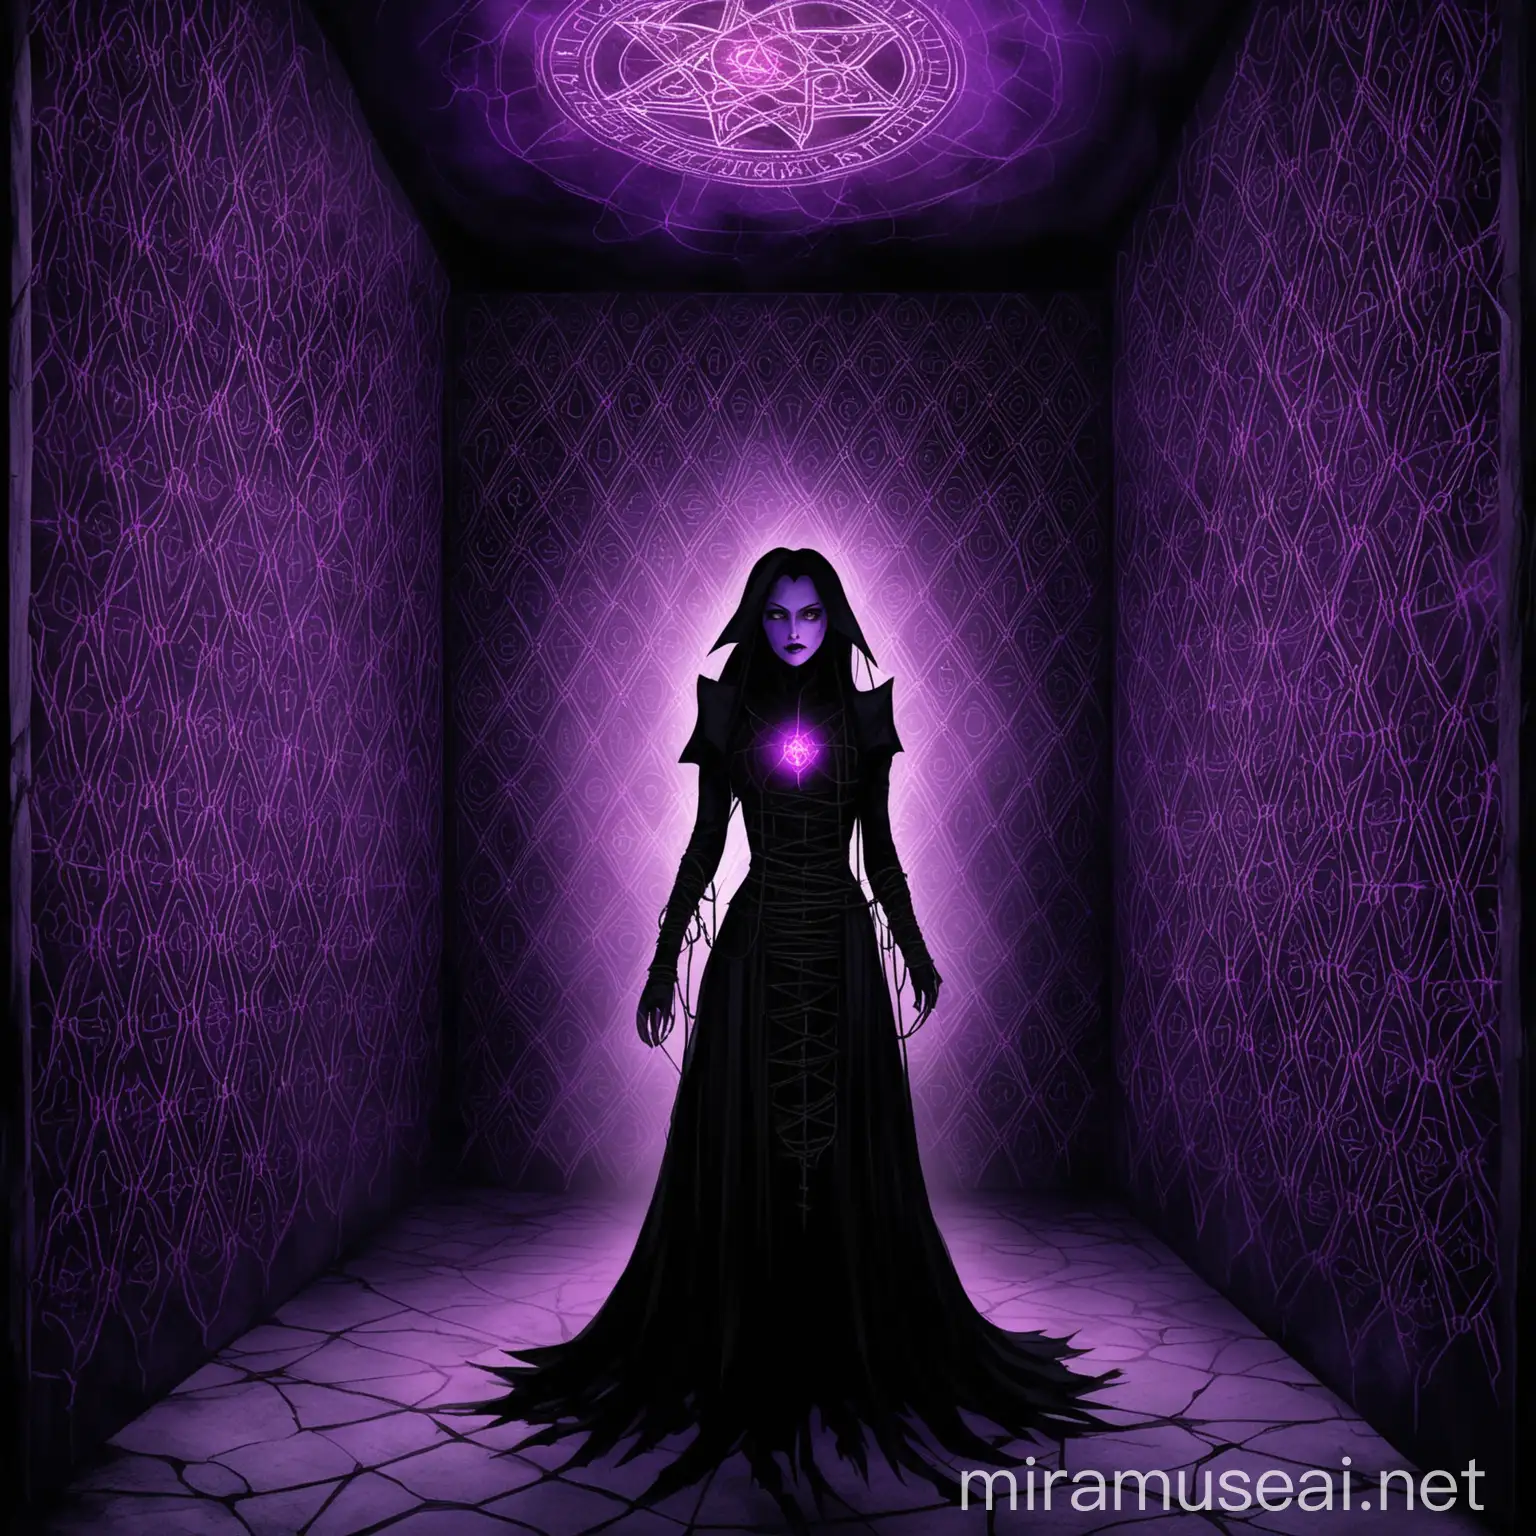 Enochian Patterned Walls Emitting Purple Light Distressed Dracula Trapped in Bondage